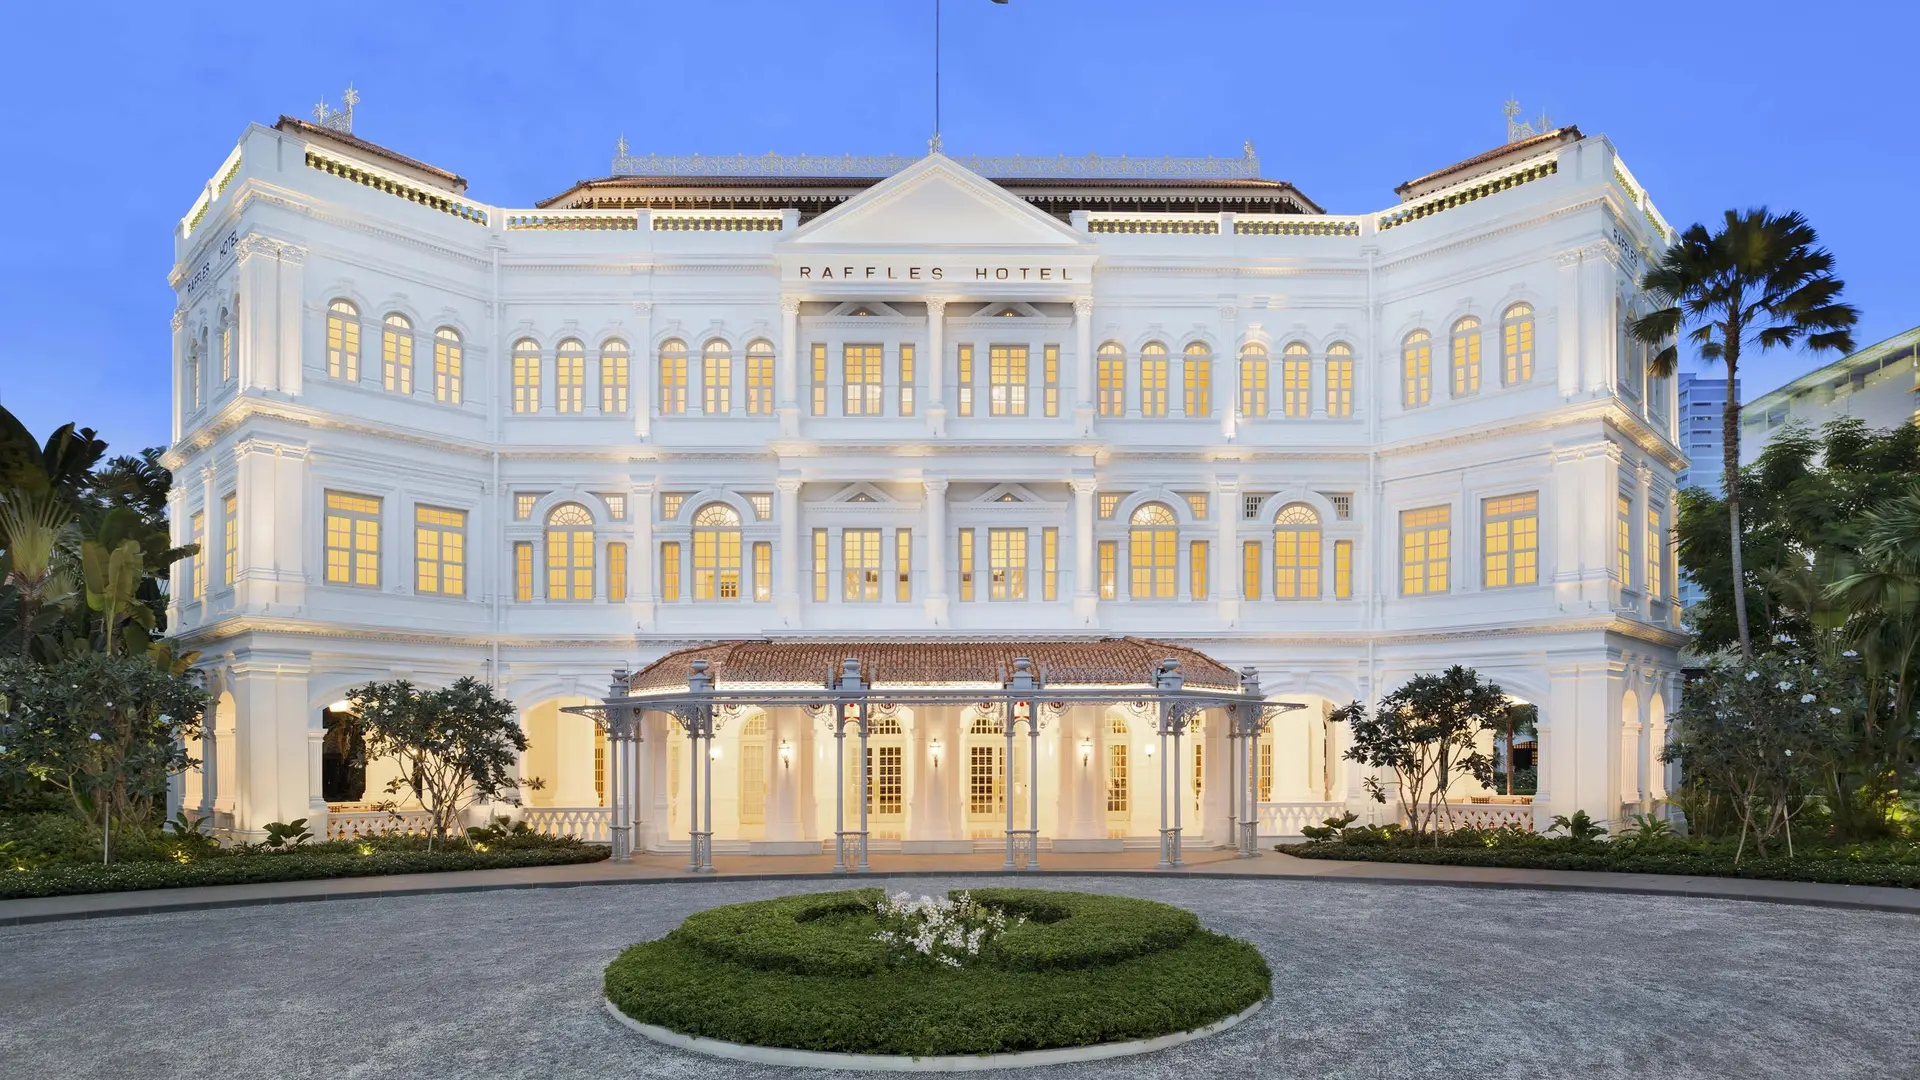 Hotel review Location' - Raffles Singapore - 0